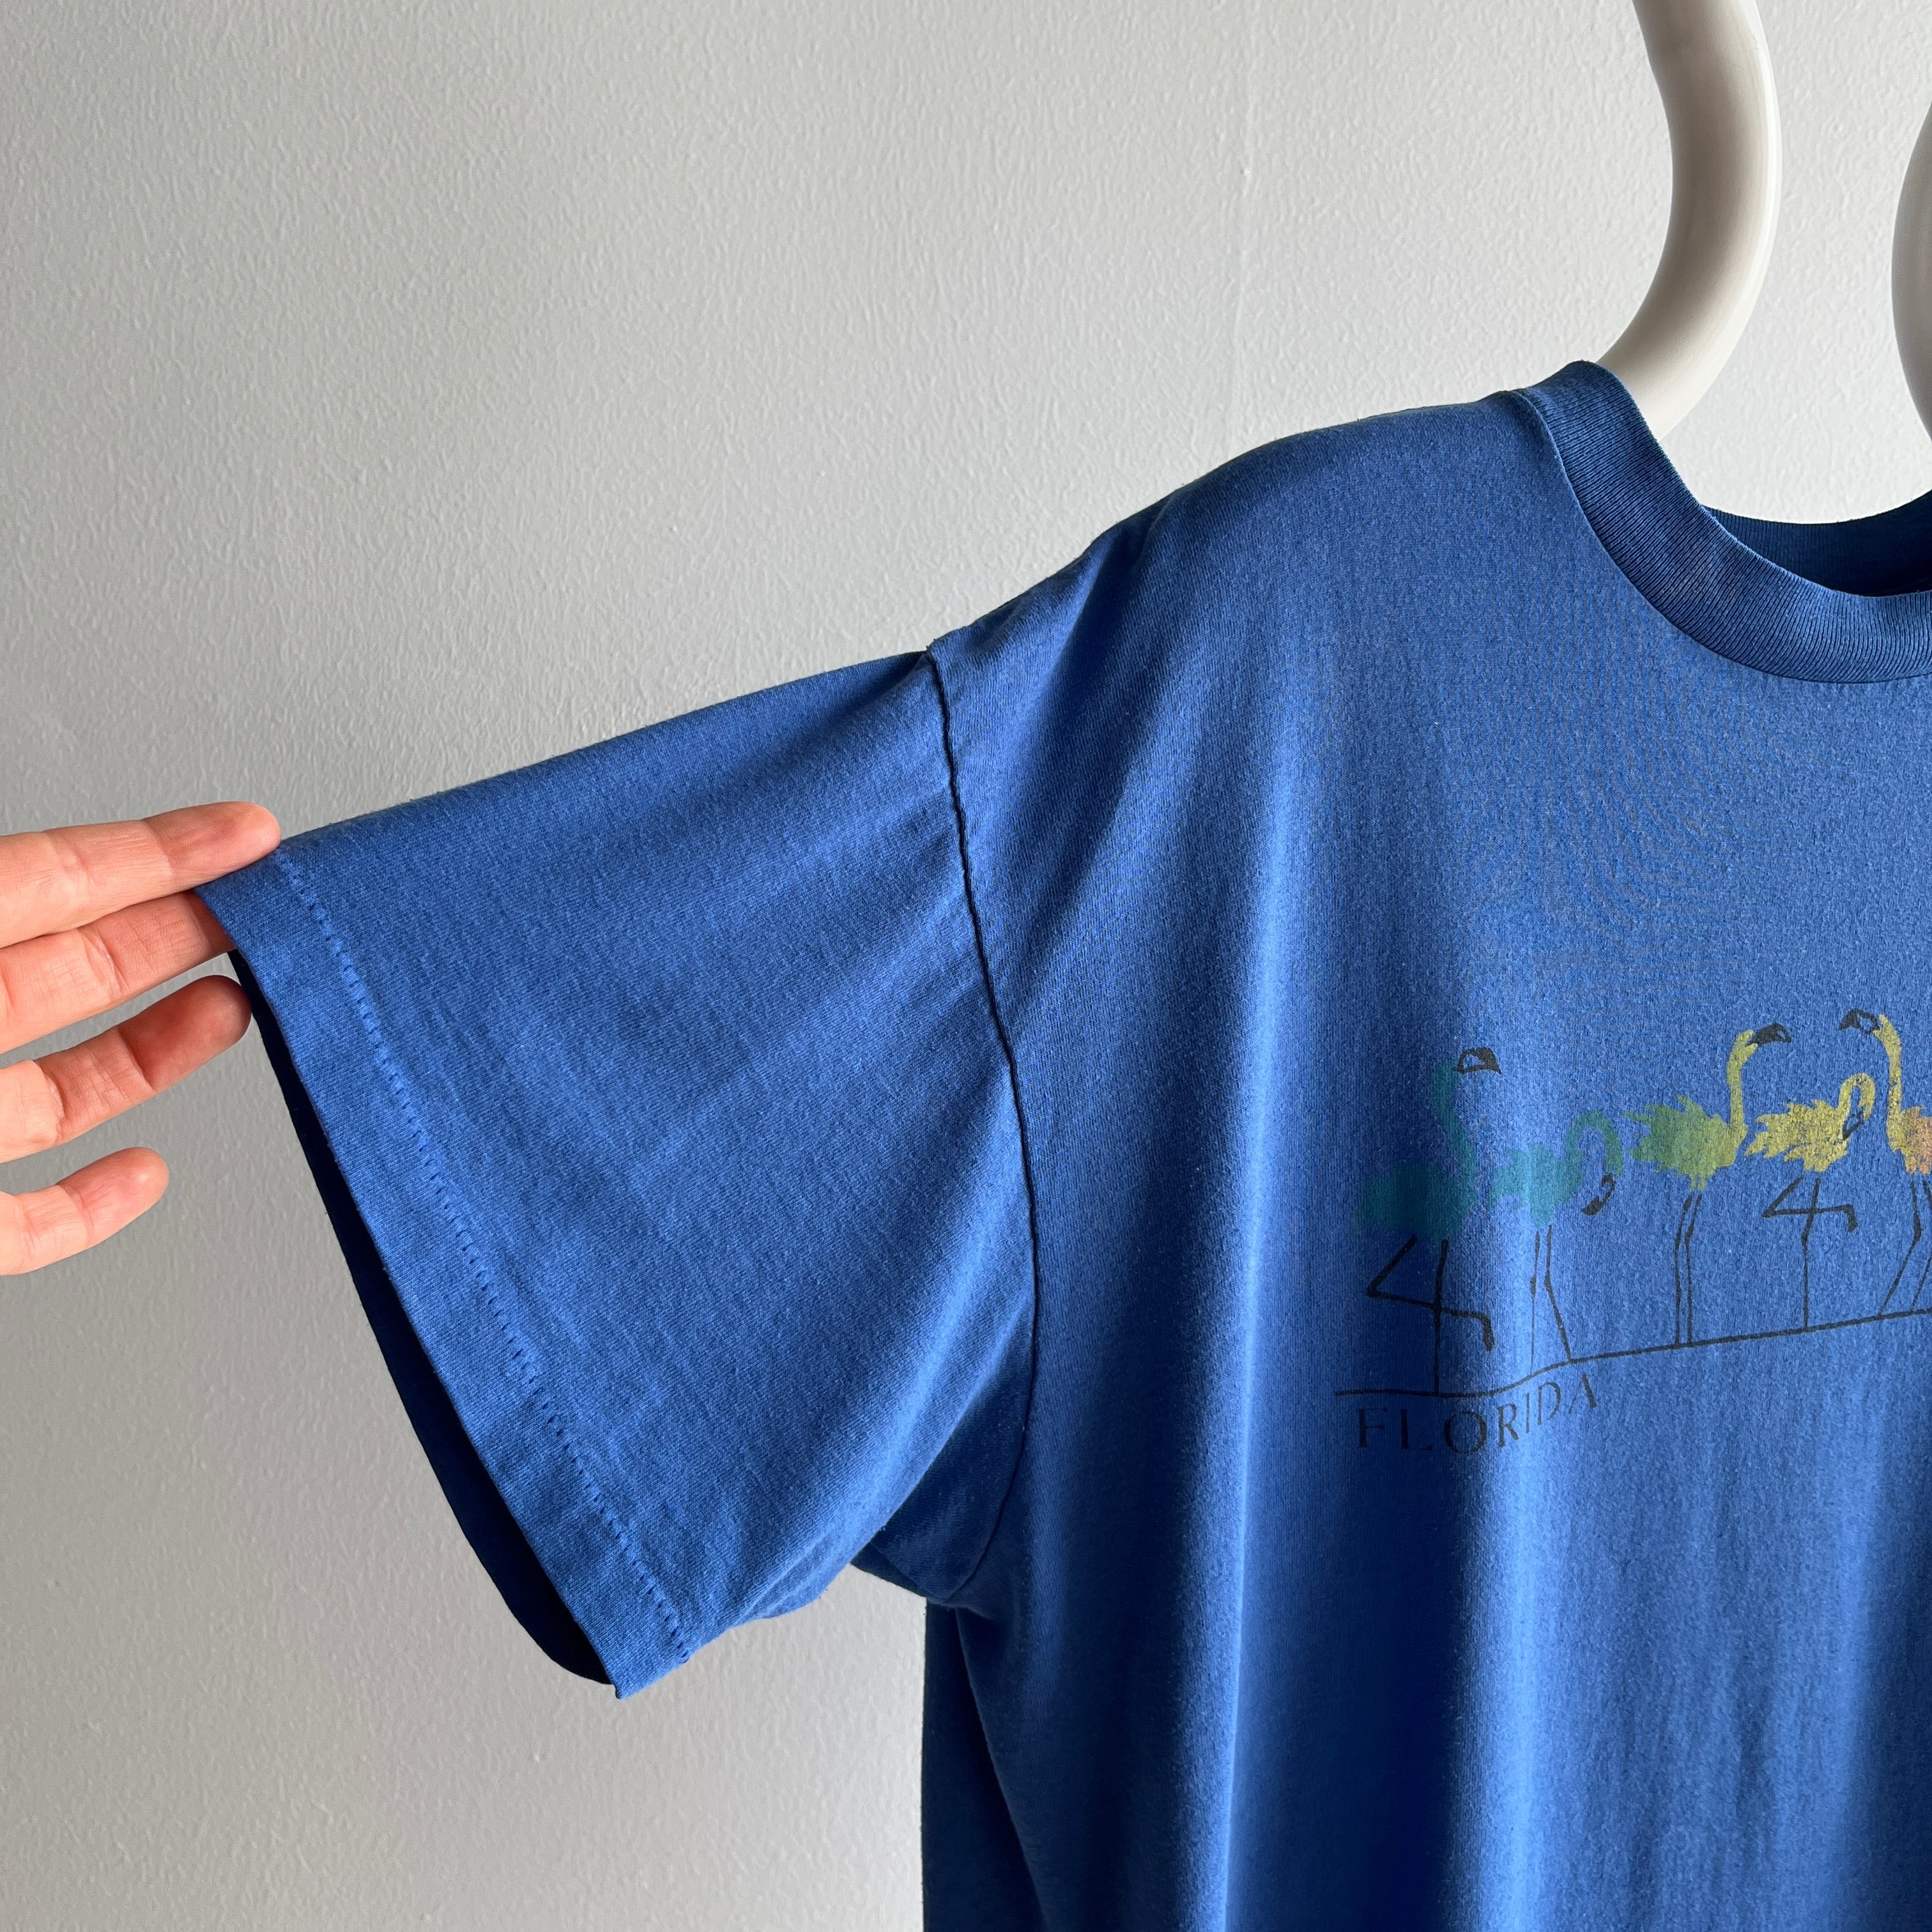 1988 Florida Lightly Destroyed T-Shirt